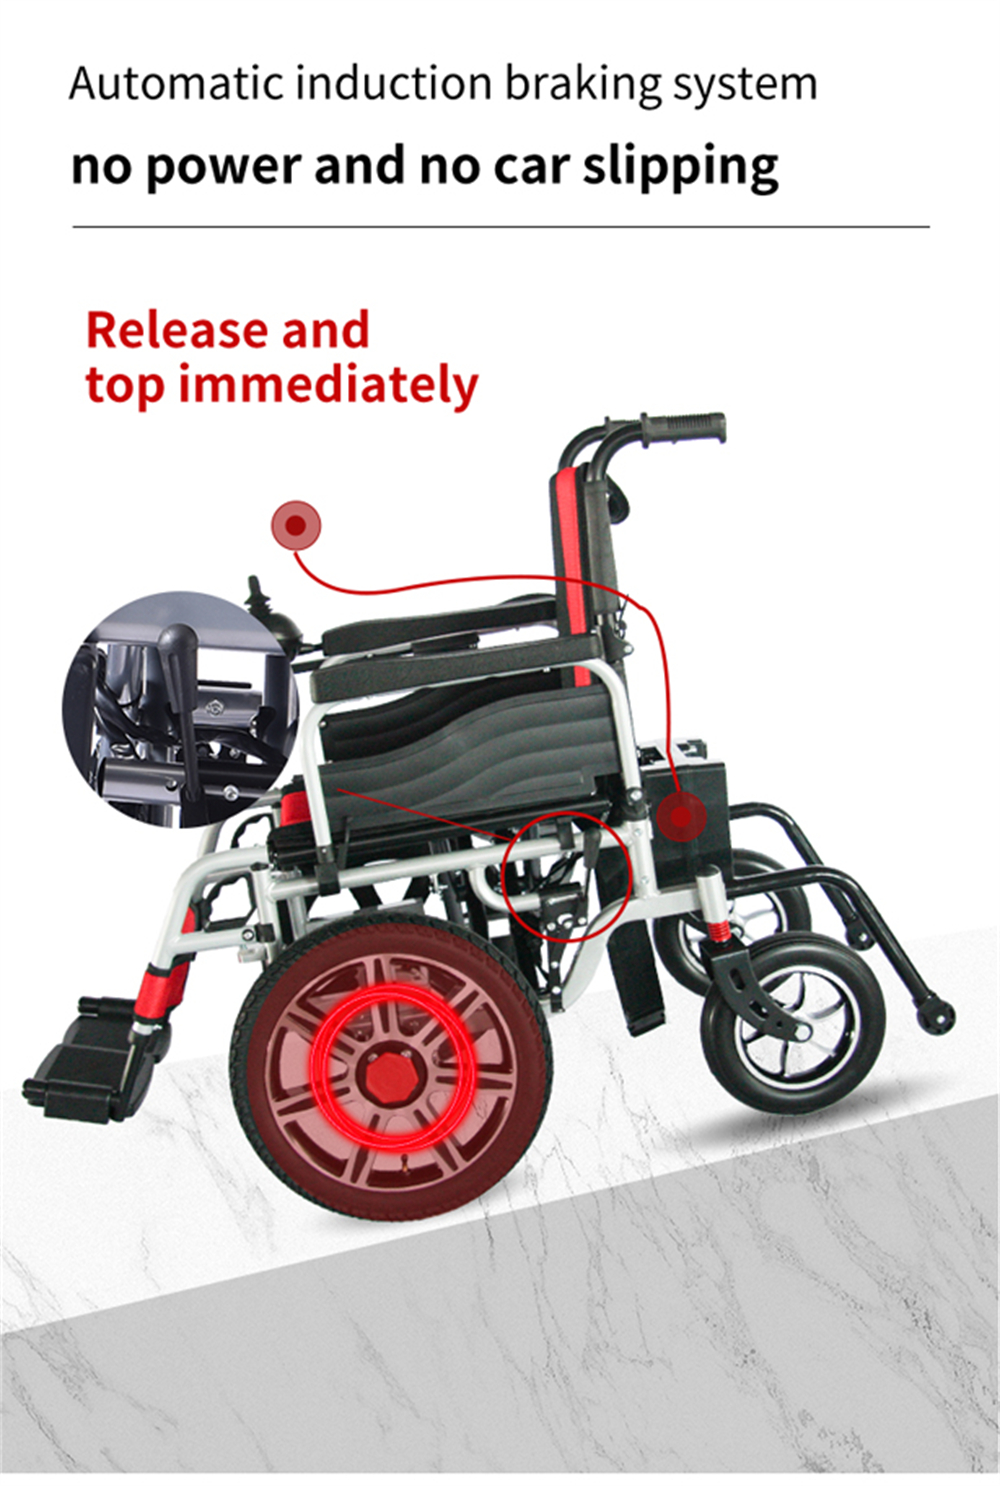 Hospital Electric Wheelchair